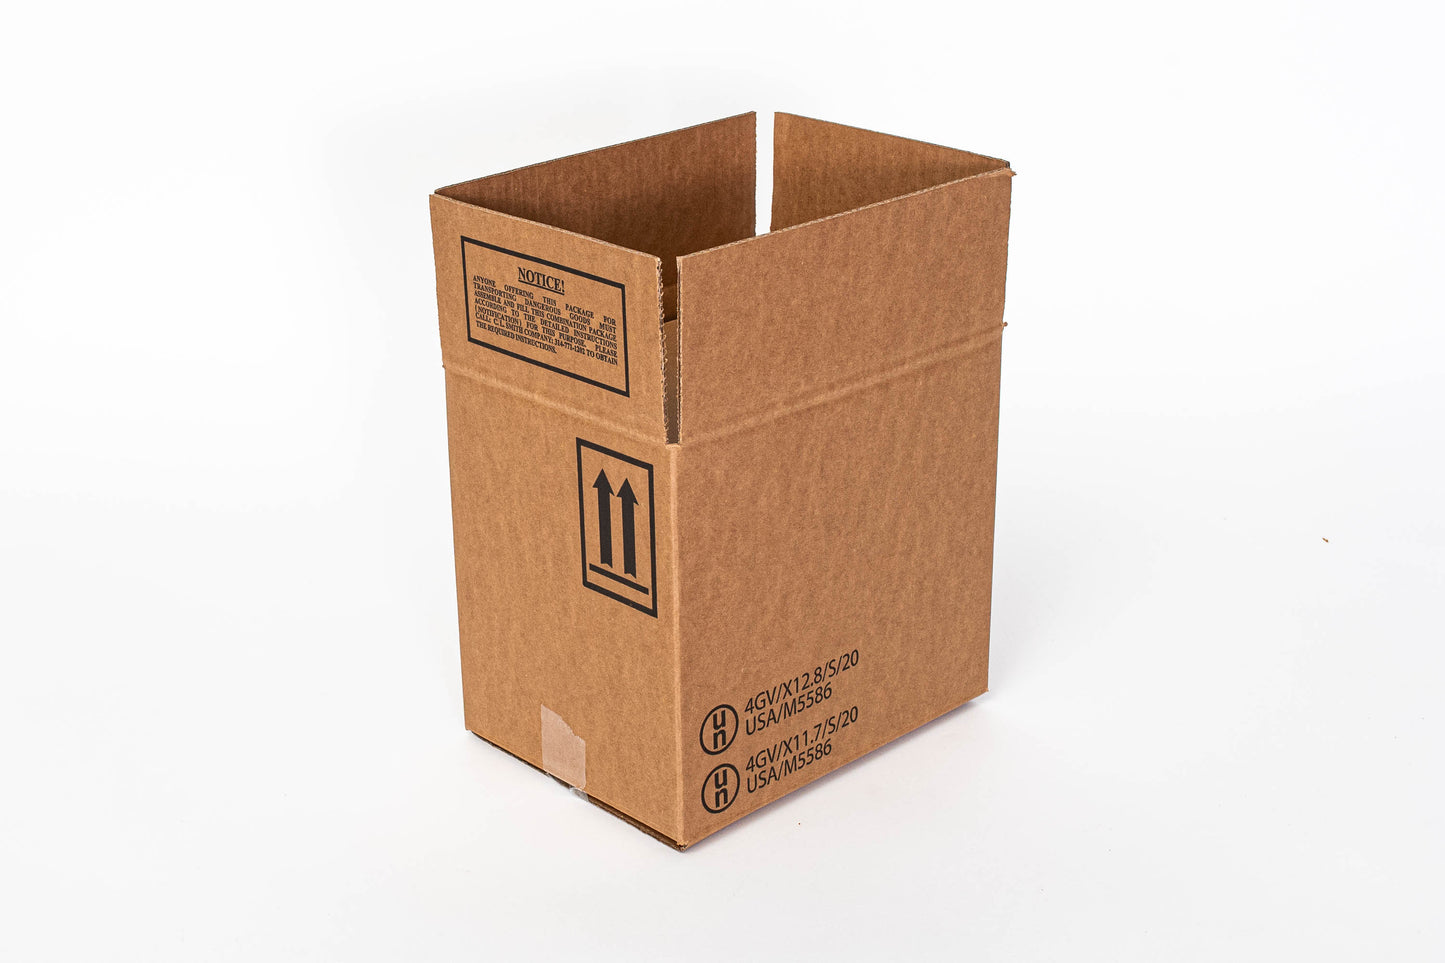 UN4GV 2-in 1 Liter/32oz (or less) Absorbent Bag Packaging Kit